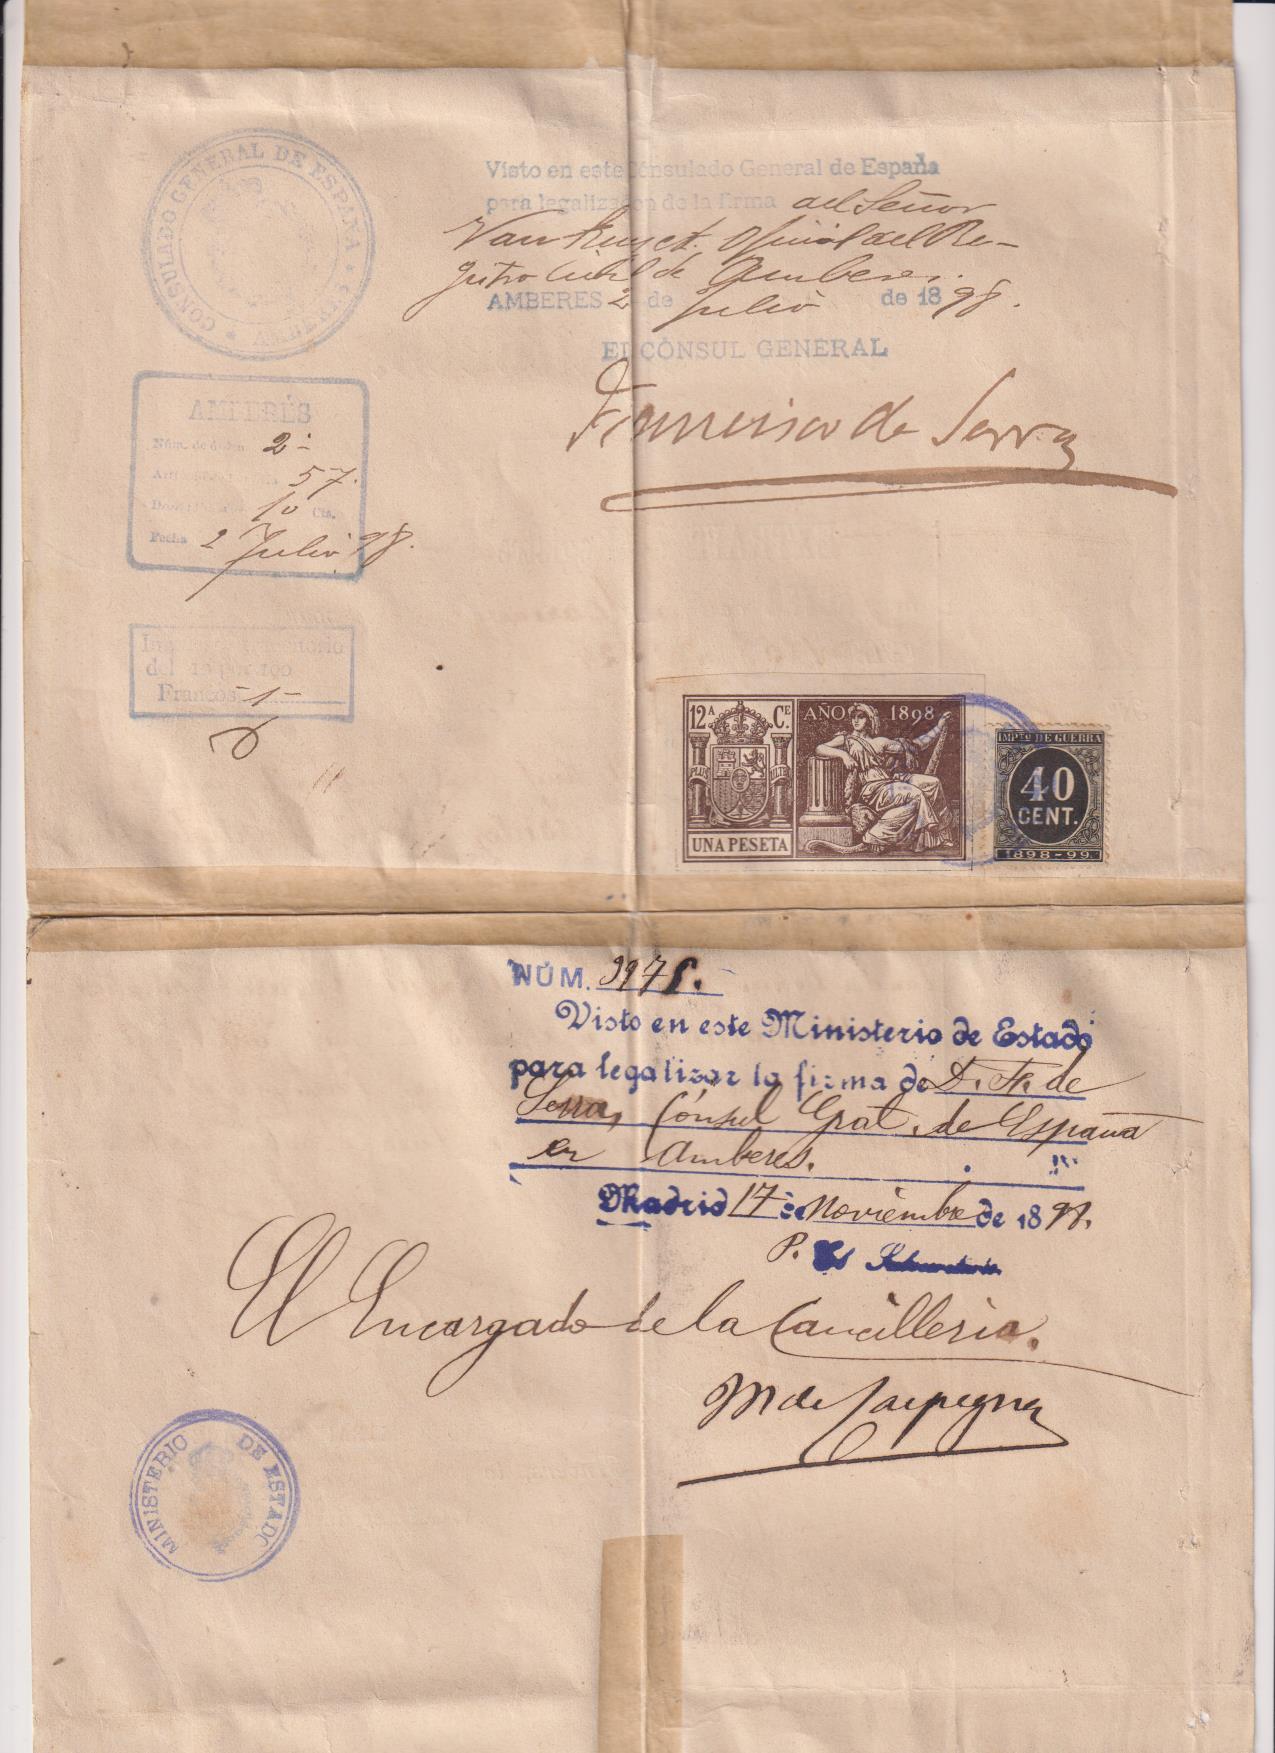 Anvers (Amberes) Certificado de Matrimonio, de 1898